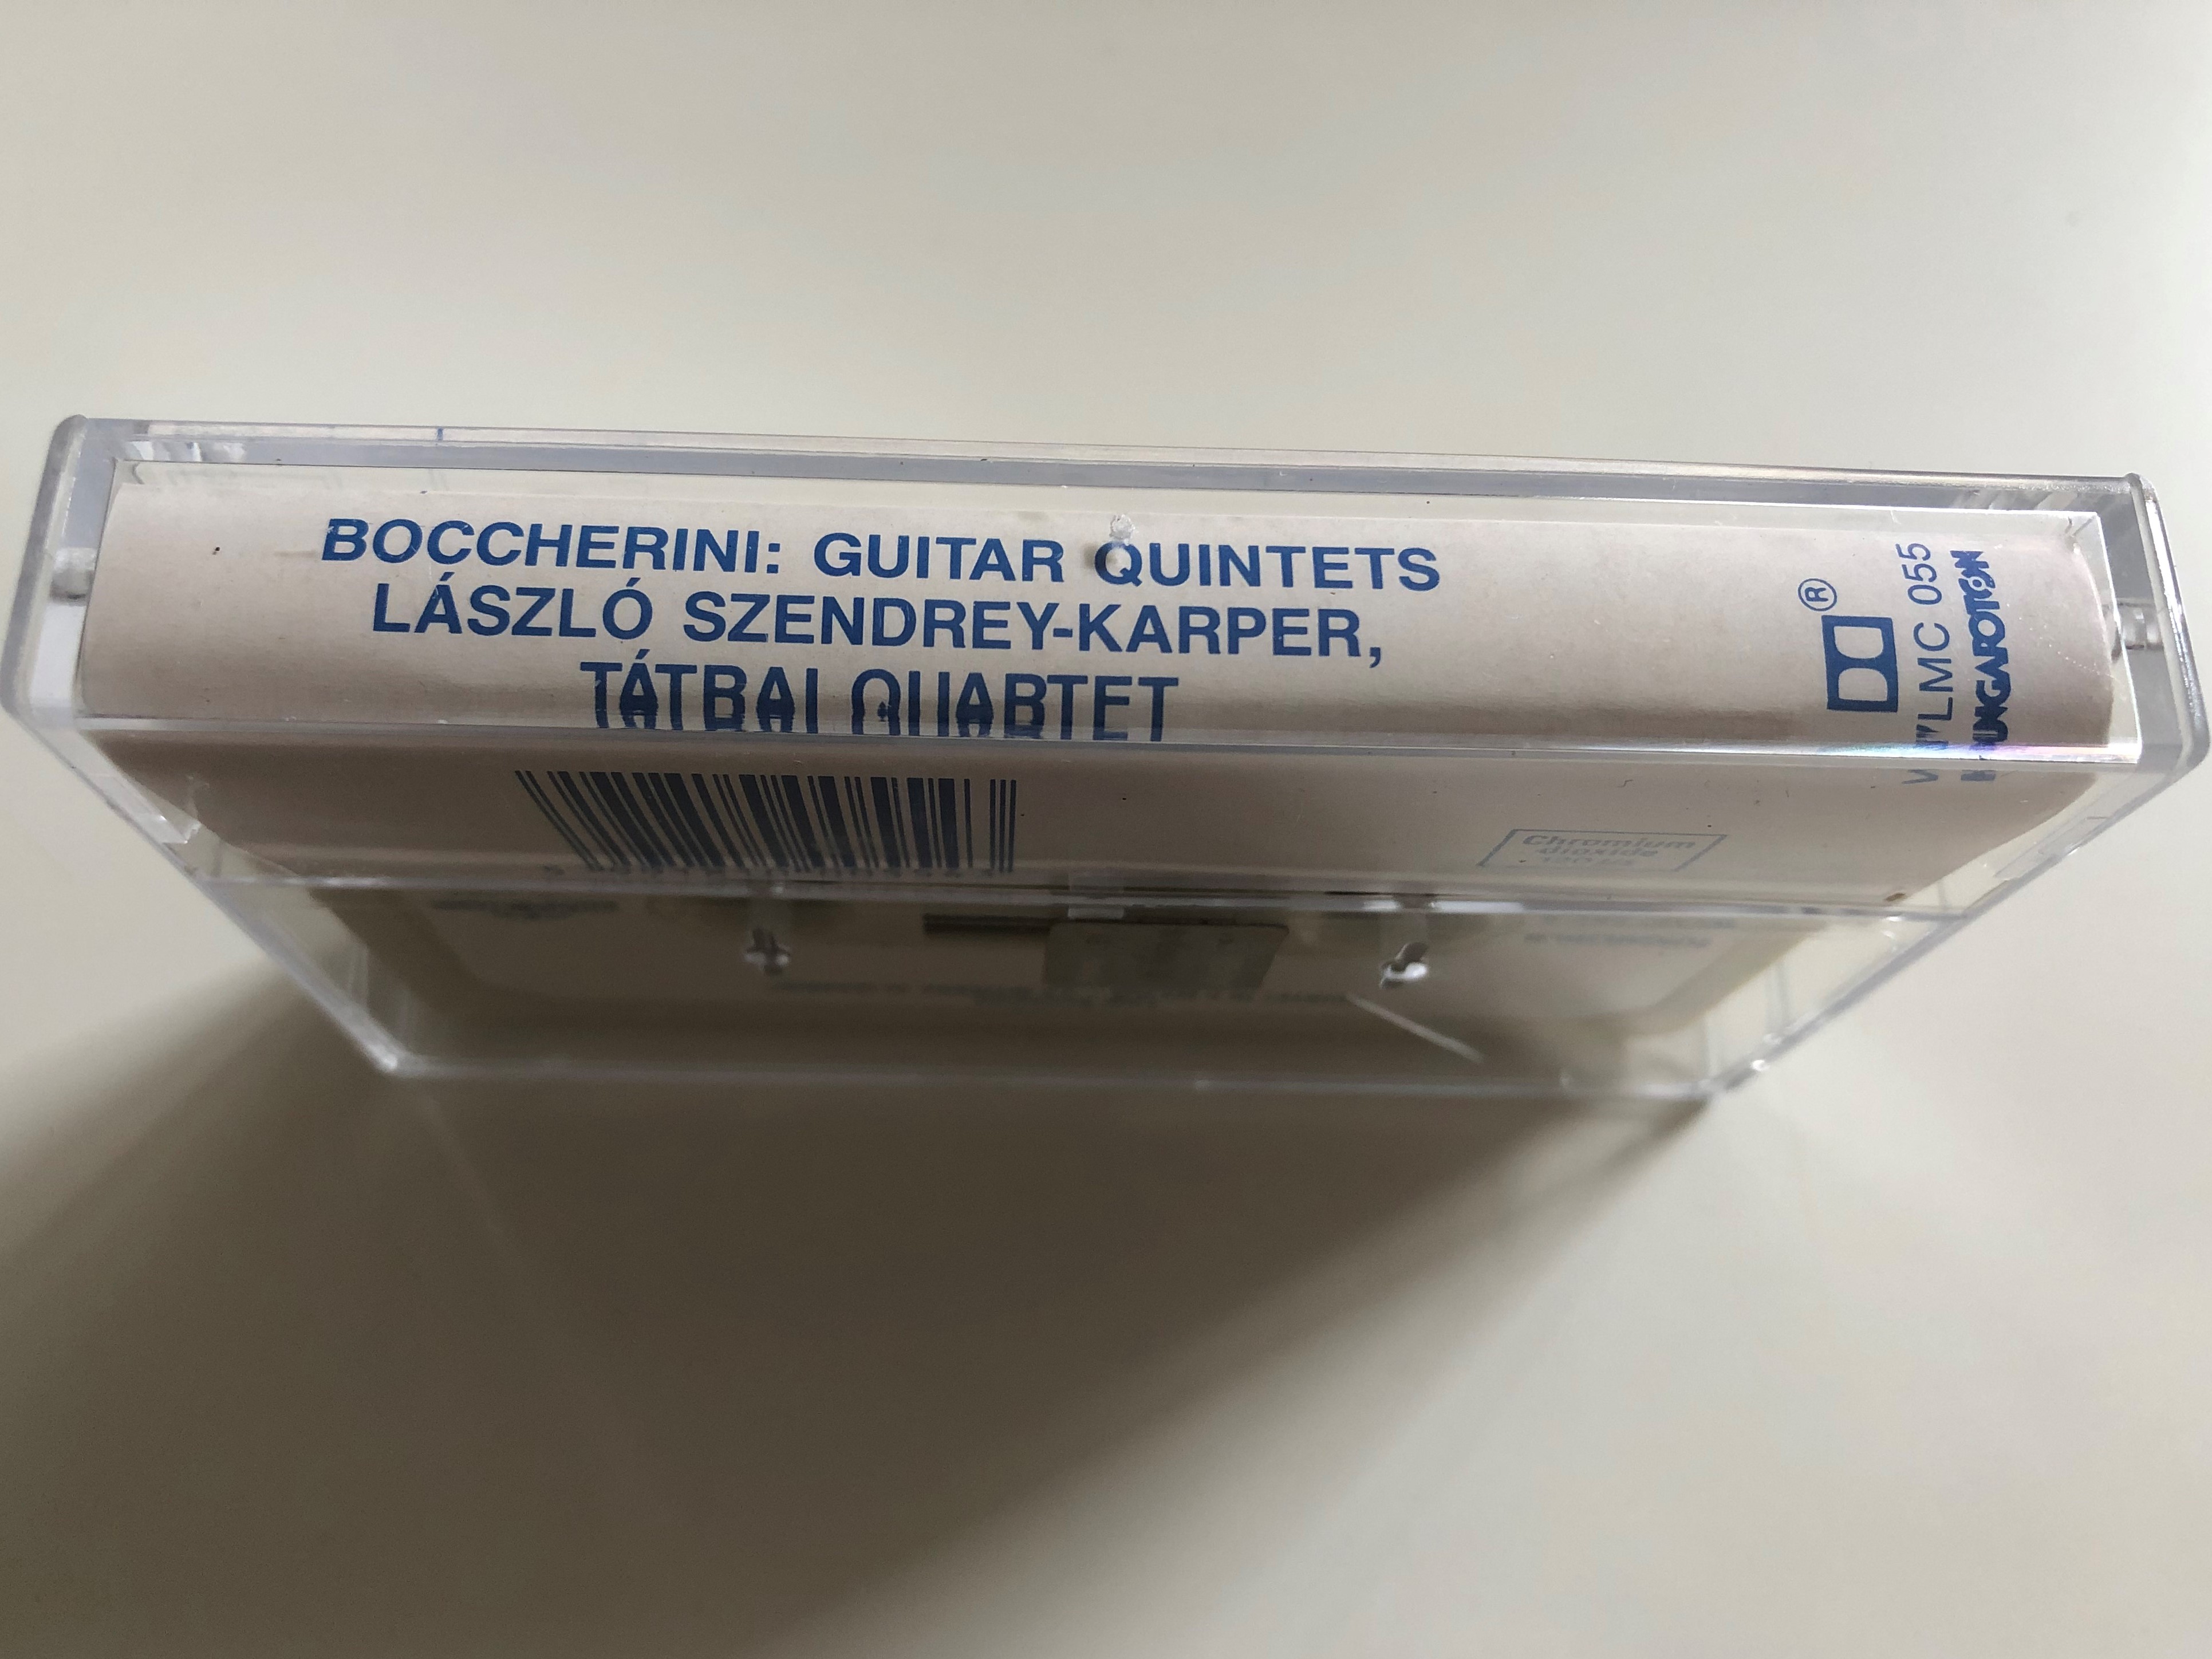 boccherini-guitar-quintets-la-ritirada-di-madrid-fandango-laszlo-szendrey-karper-tatrai-quartet-white-label-cassette-stereo-wlmc-055-4-.jpg